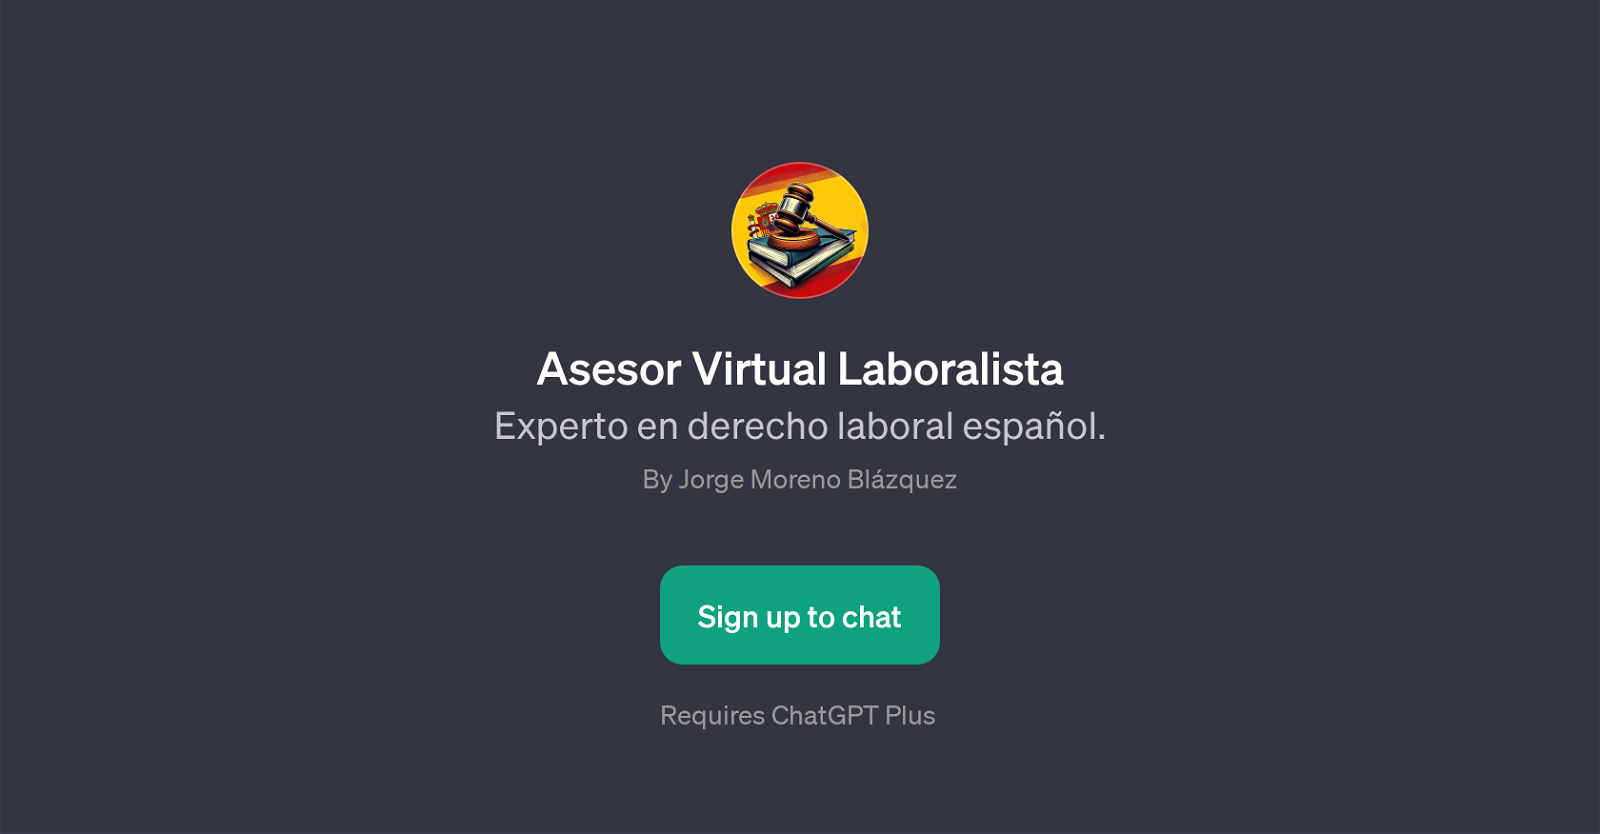 Asesor Virtual Laboralista website